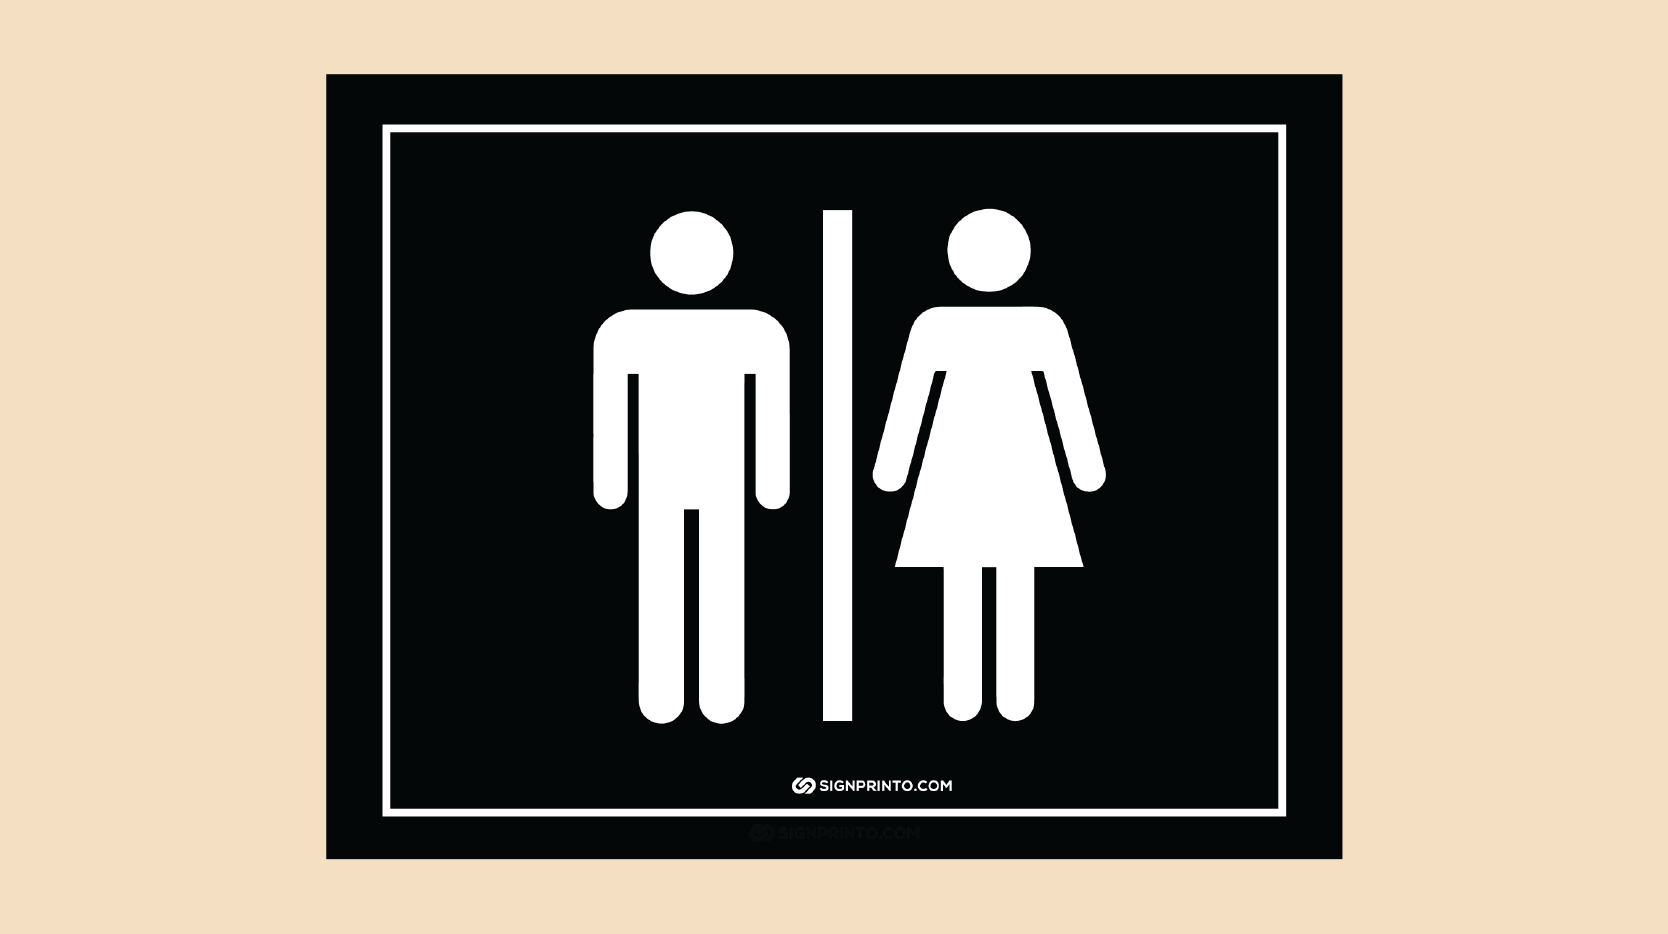 Toilet Sign